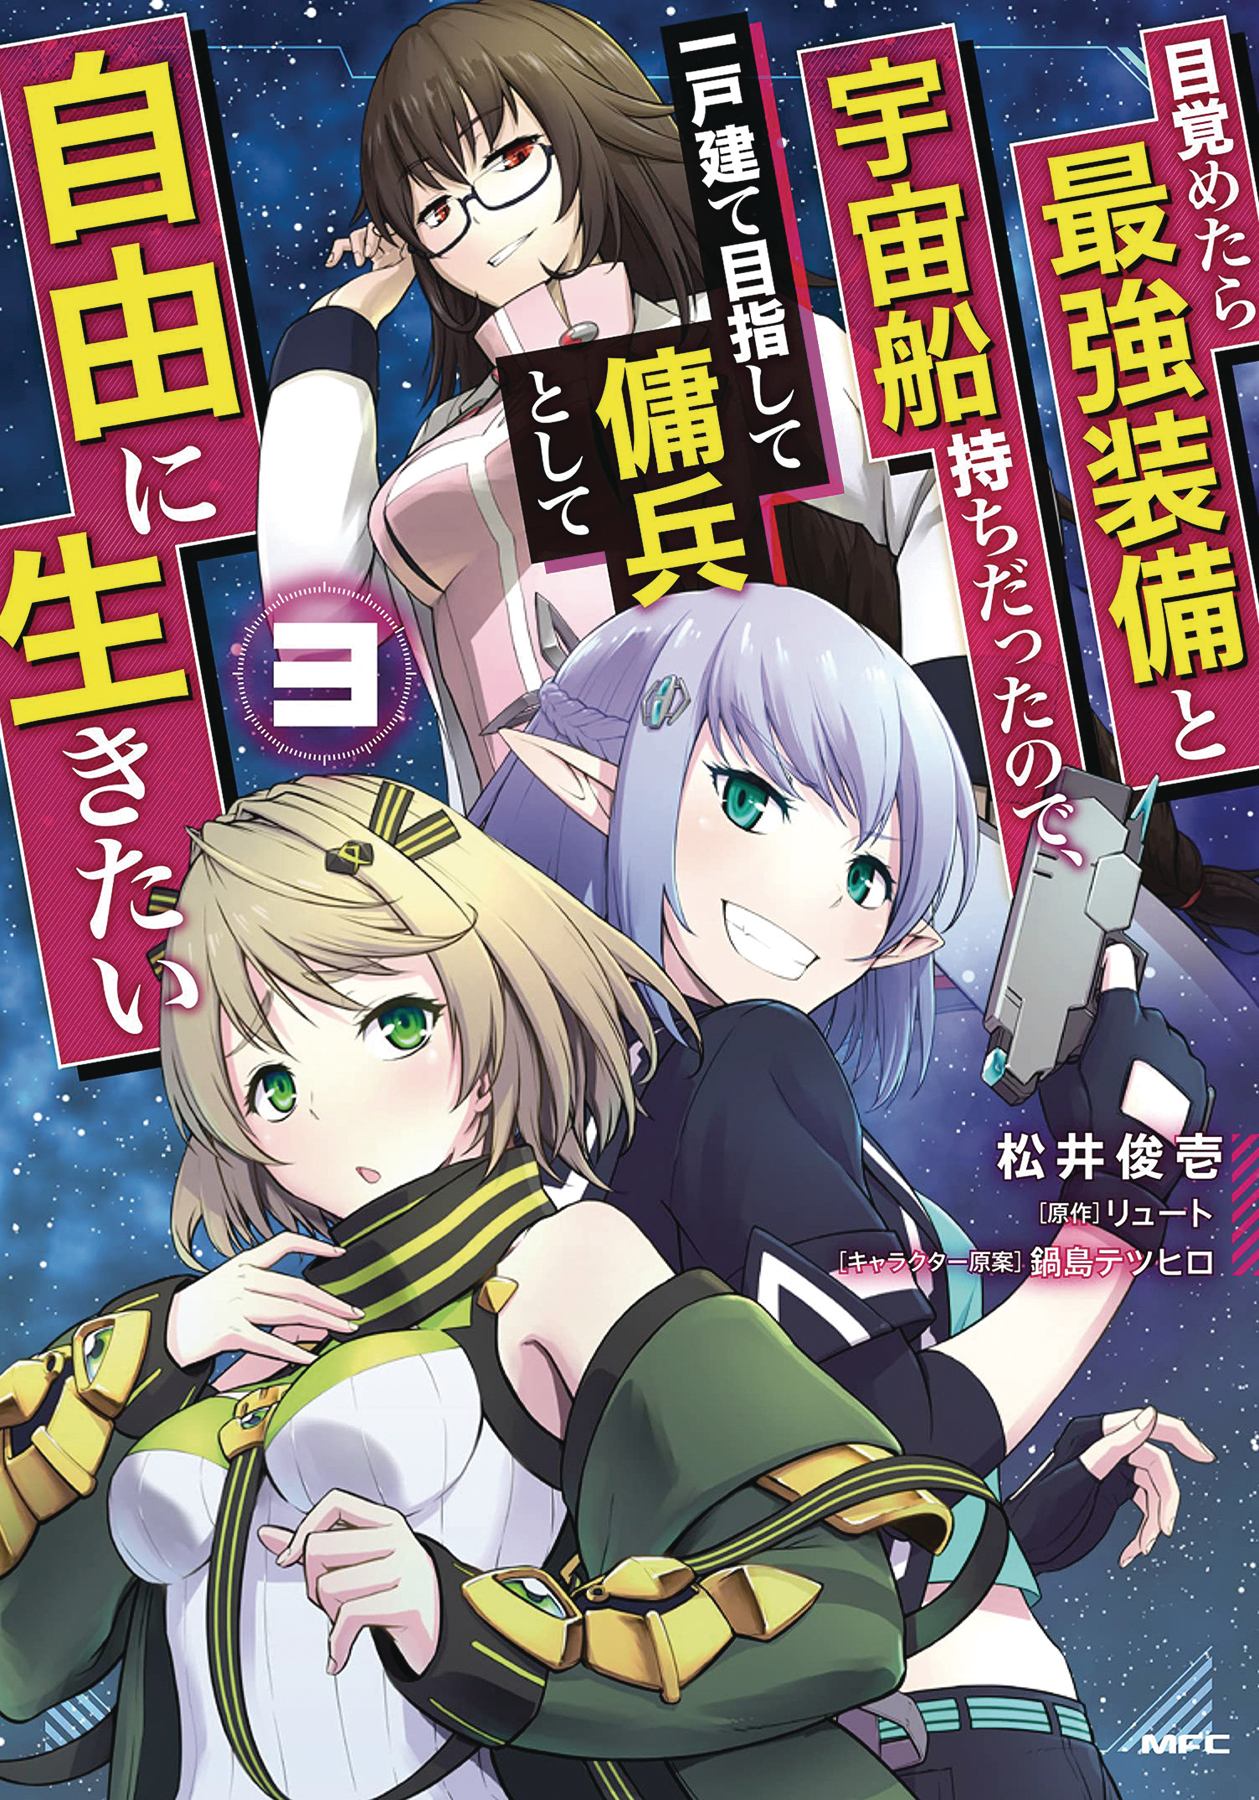 Reborn as a Space Mercenary: I Woke Up Piloting the Strongest Starship! Manga Volume 3